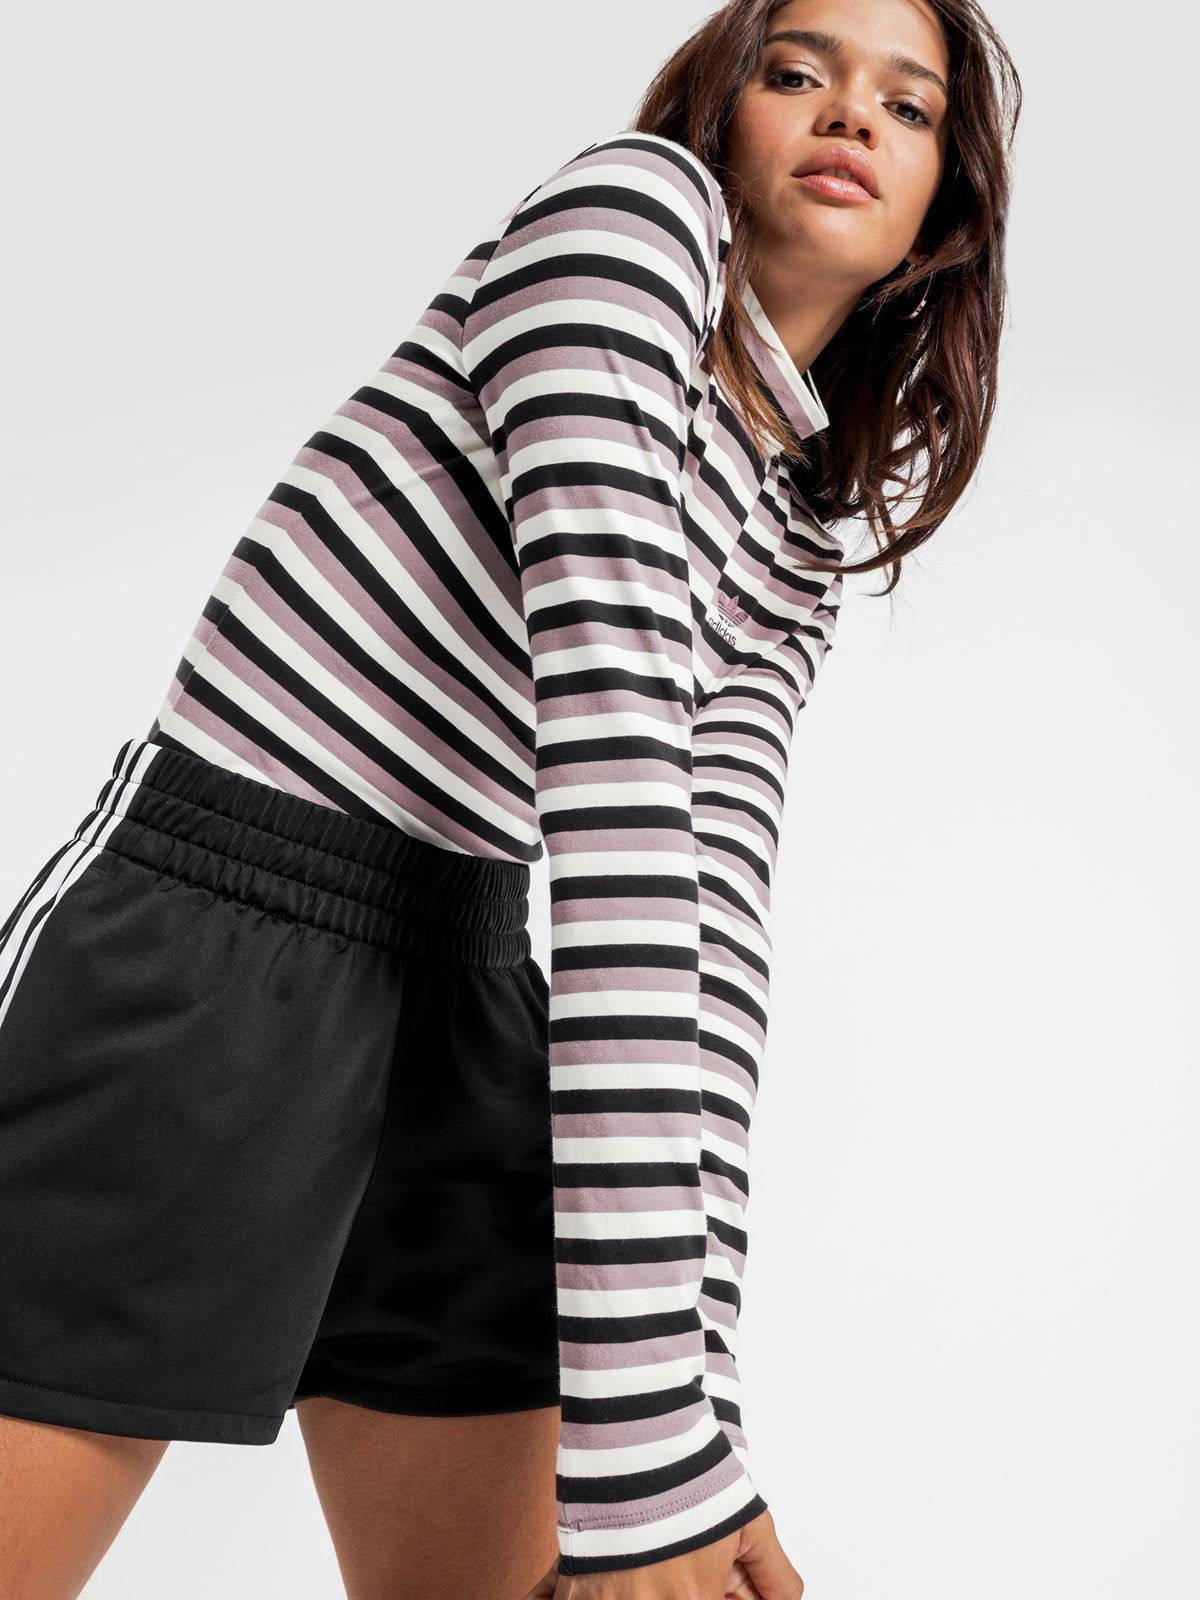 CC Striped Long Sleeve T-Shirt in Black White &amp; Purple